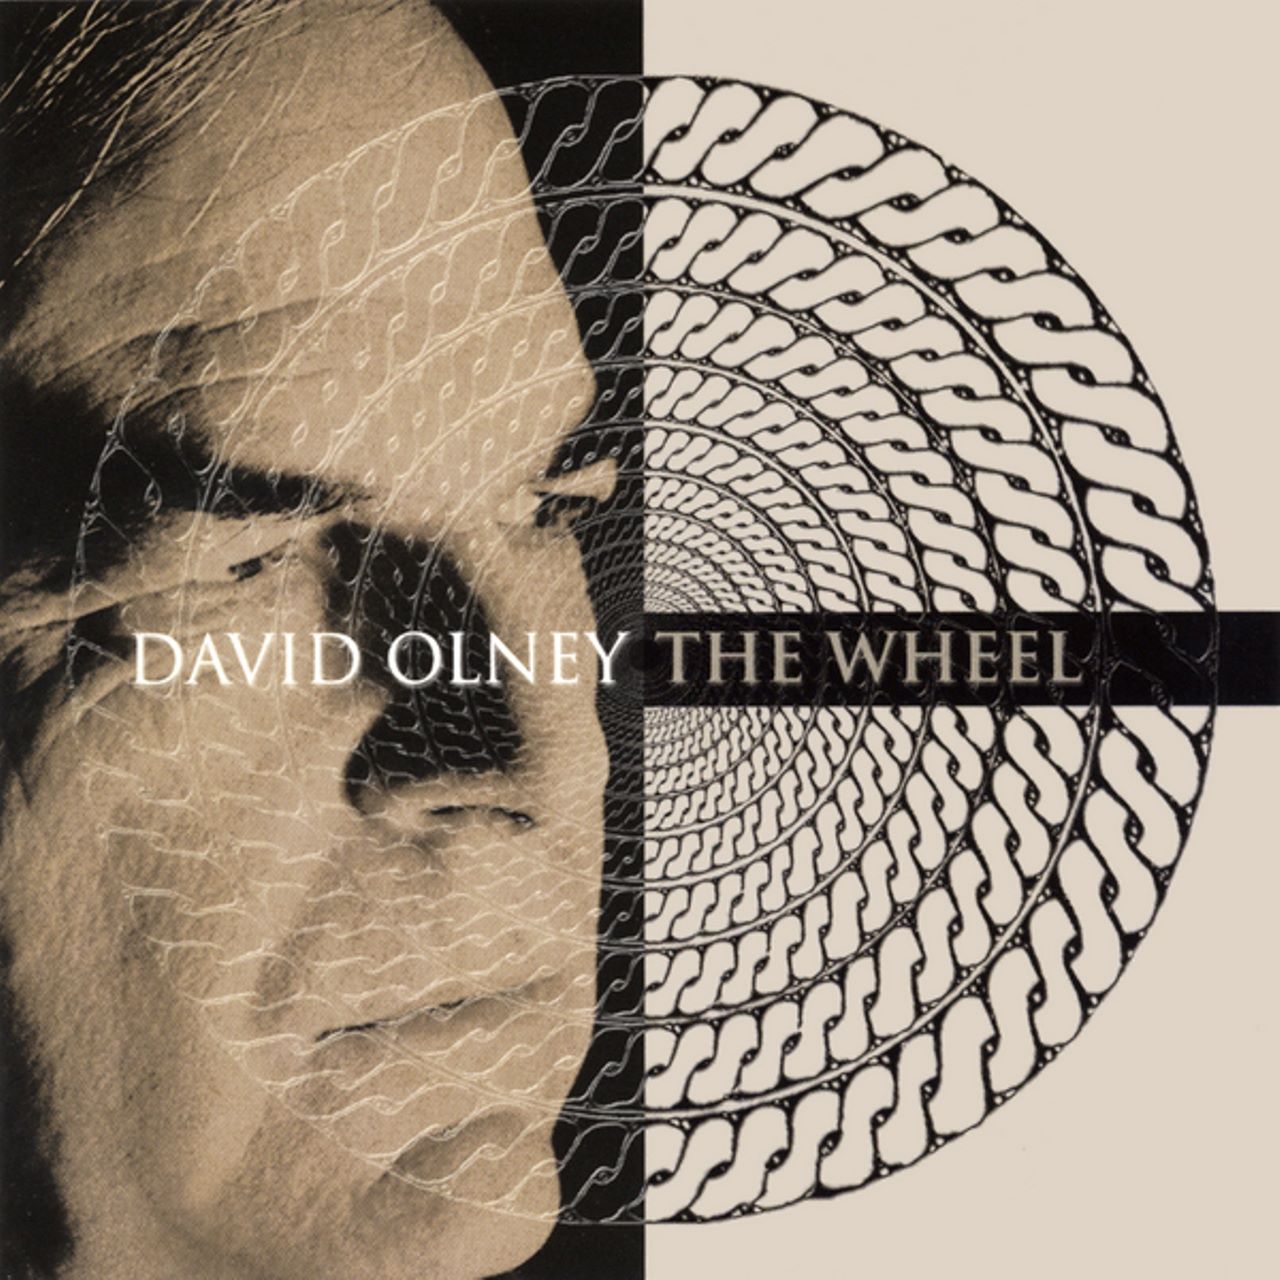 David Olney - The Wheel cover album